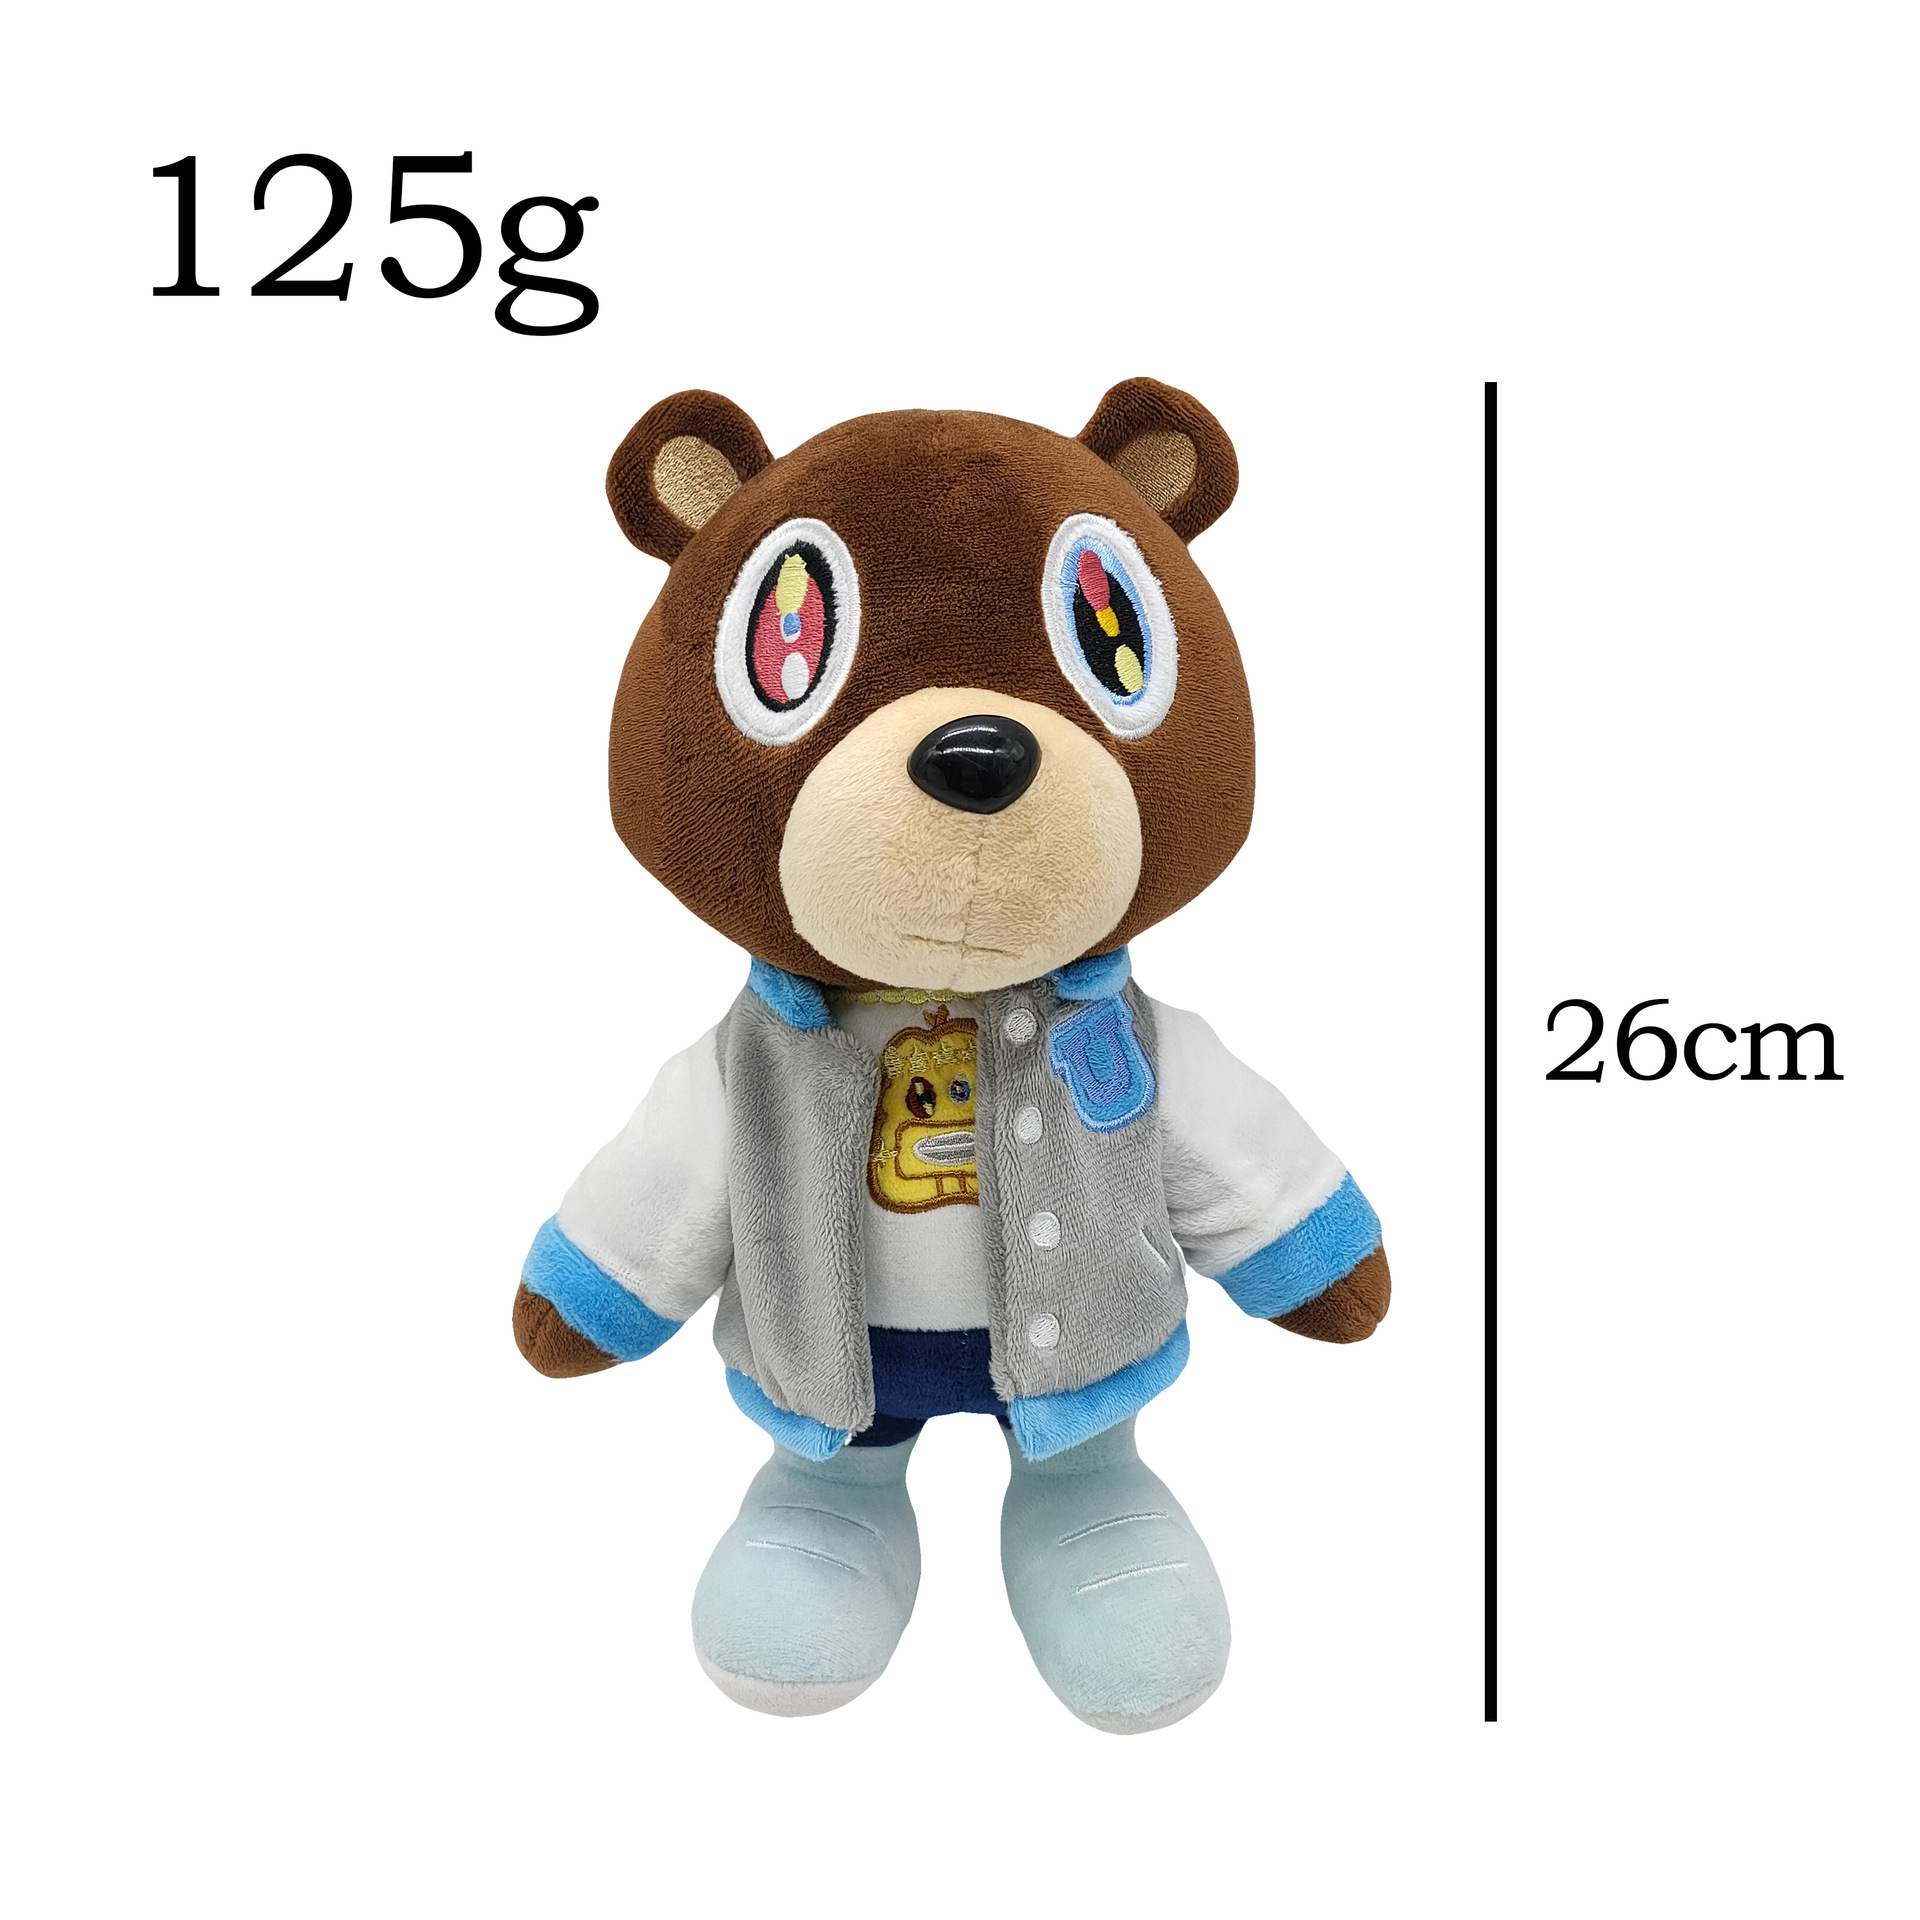 Kanye teddy bear anime plush doll 26cm